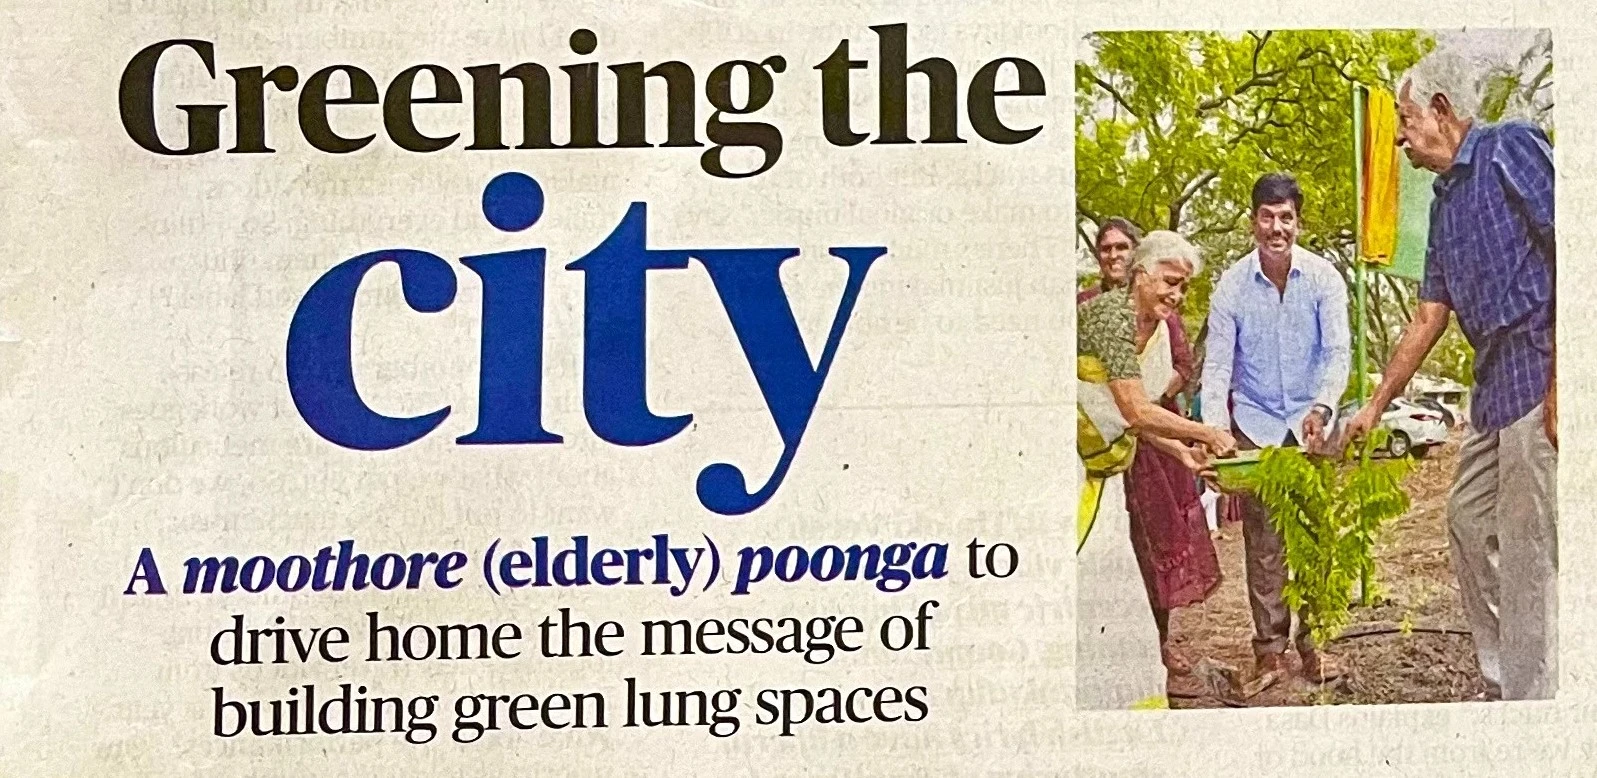 The Greening city